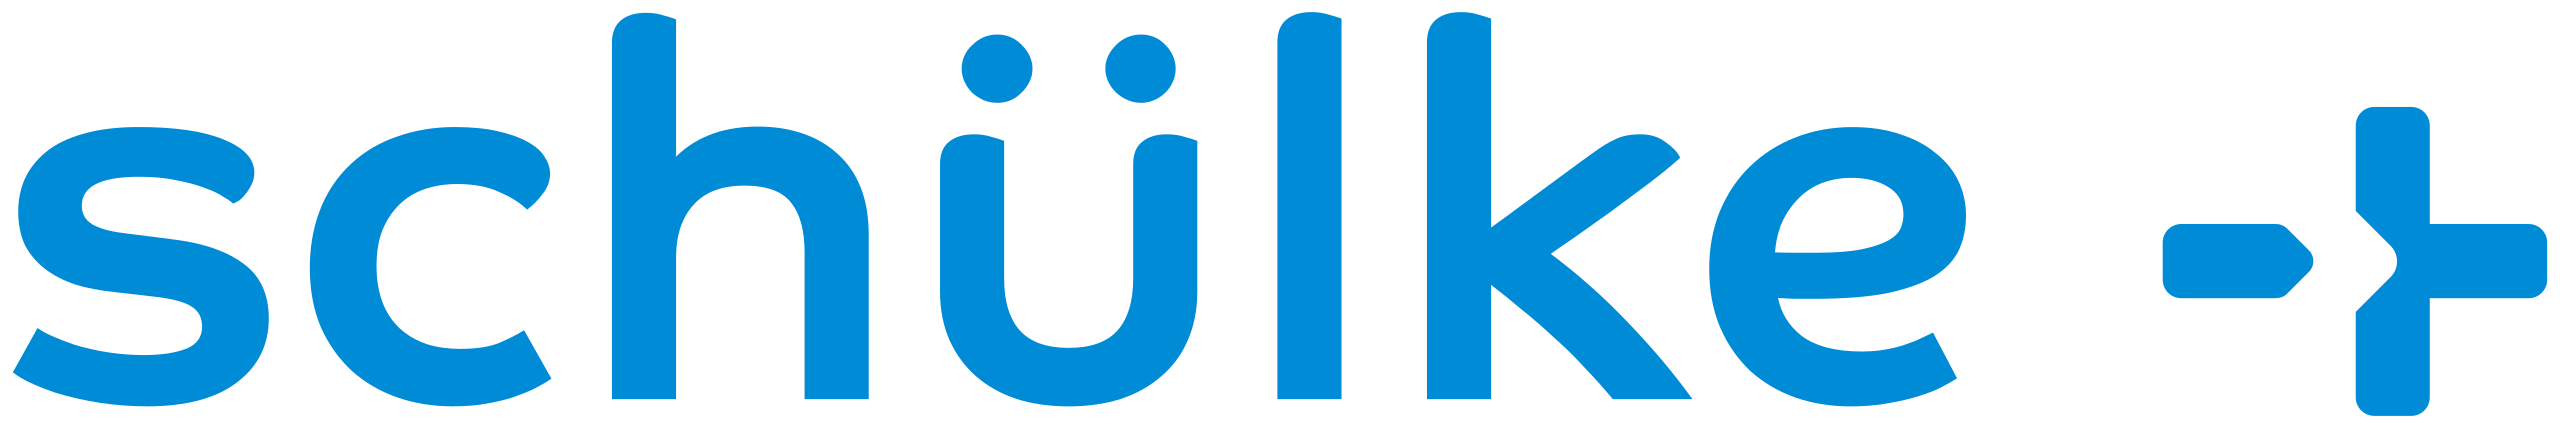 schülke logo bild